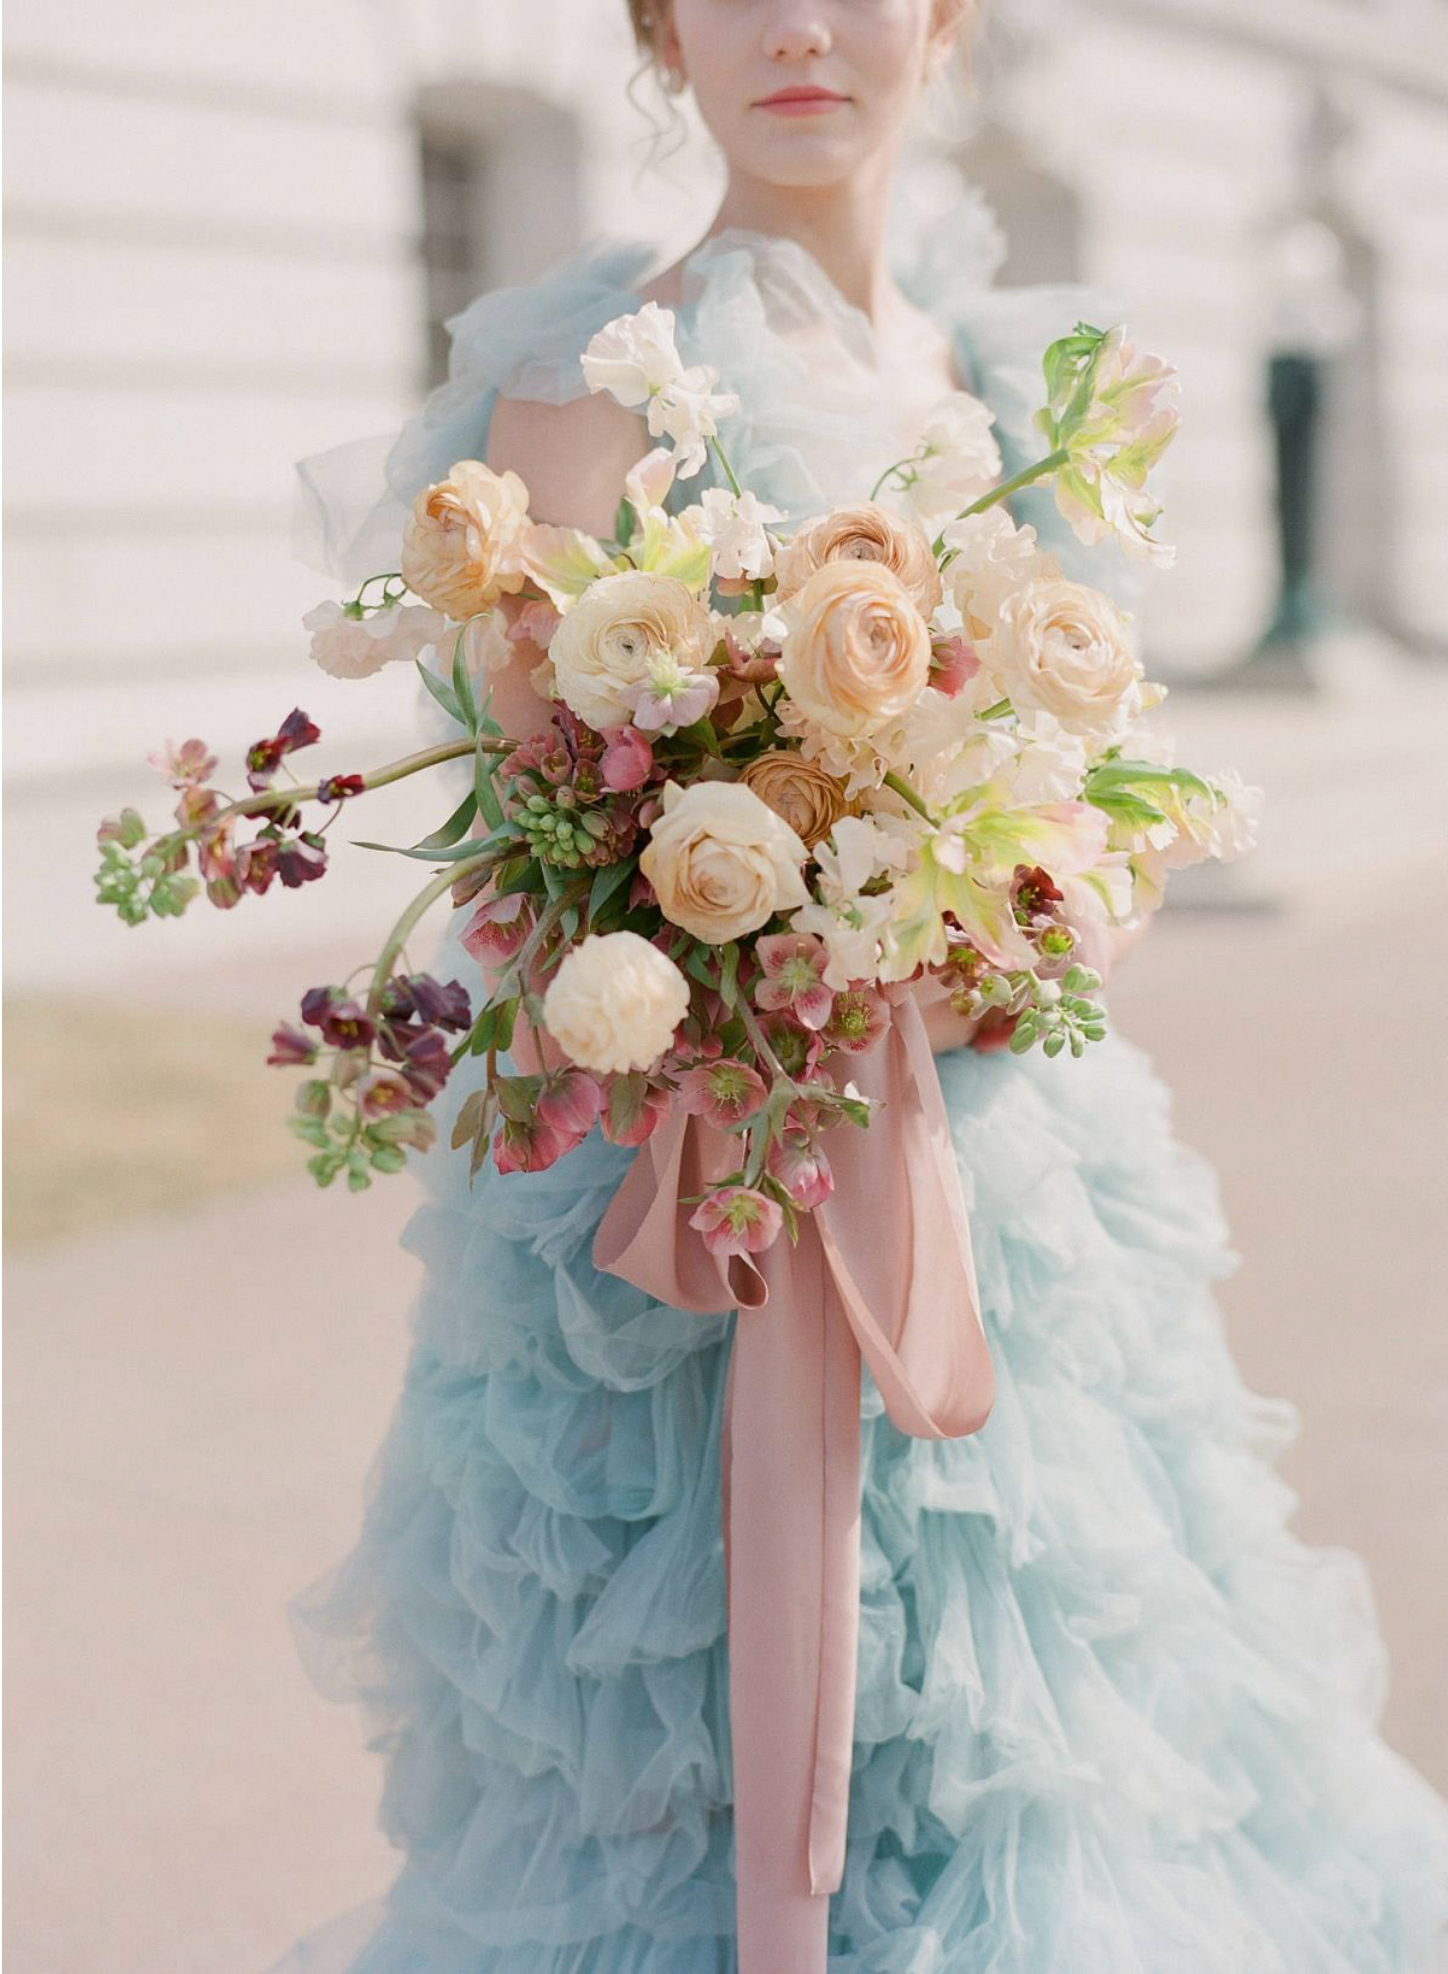 WEDDING SPARROW / CAPITOL ELOPEMENT IN BLUE WEDDING DRESS